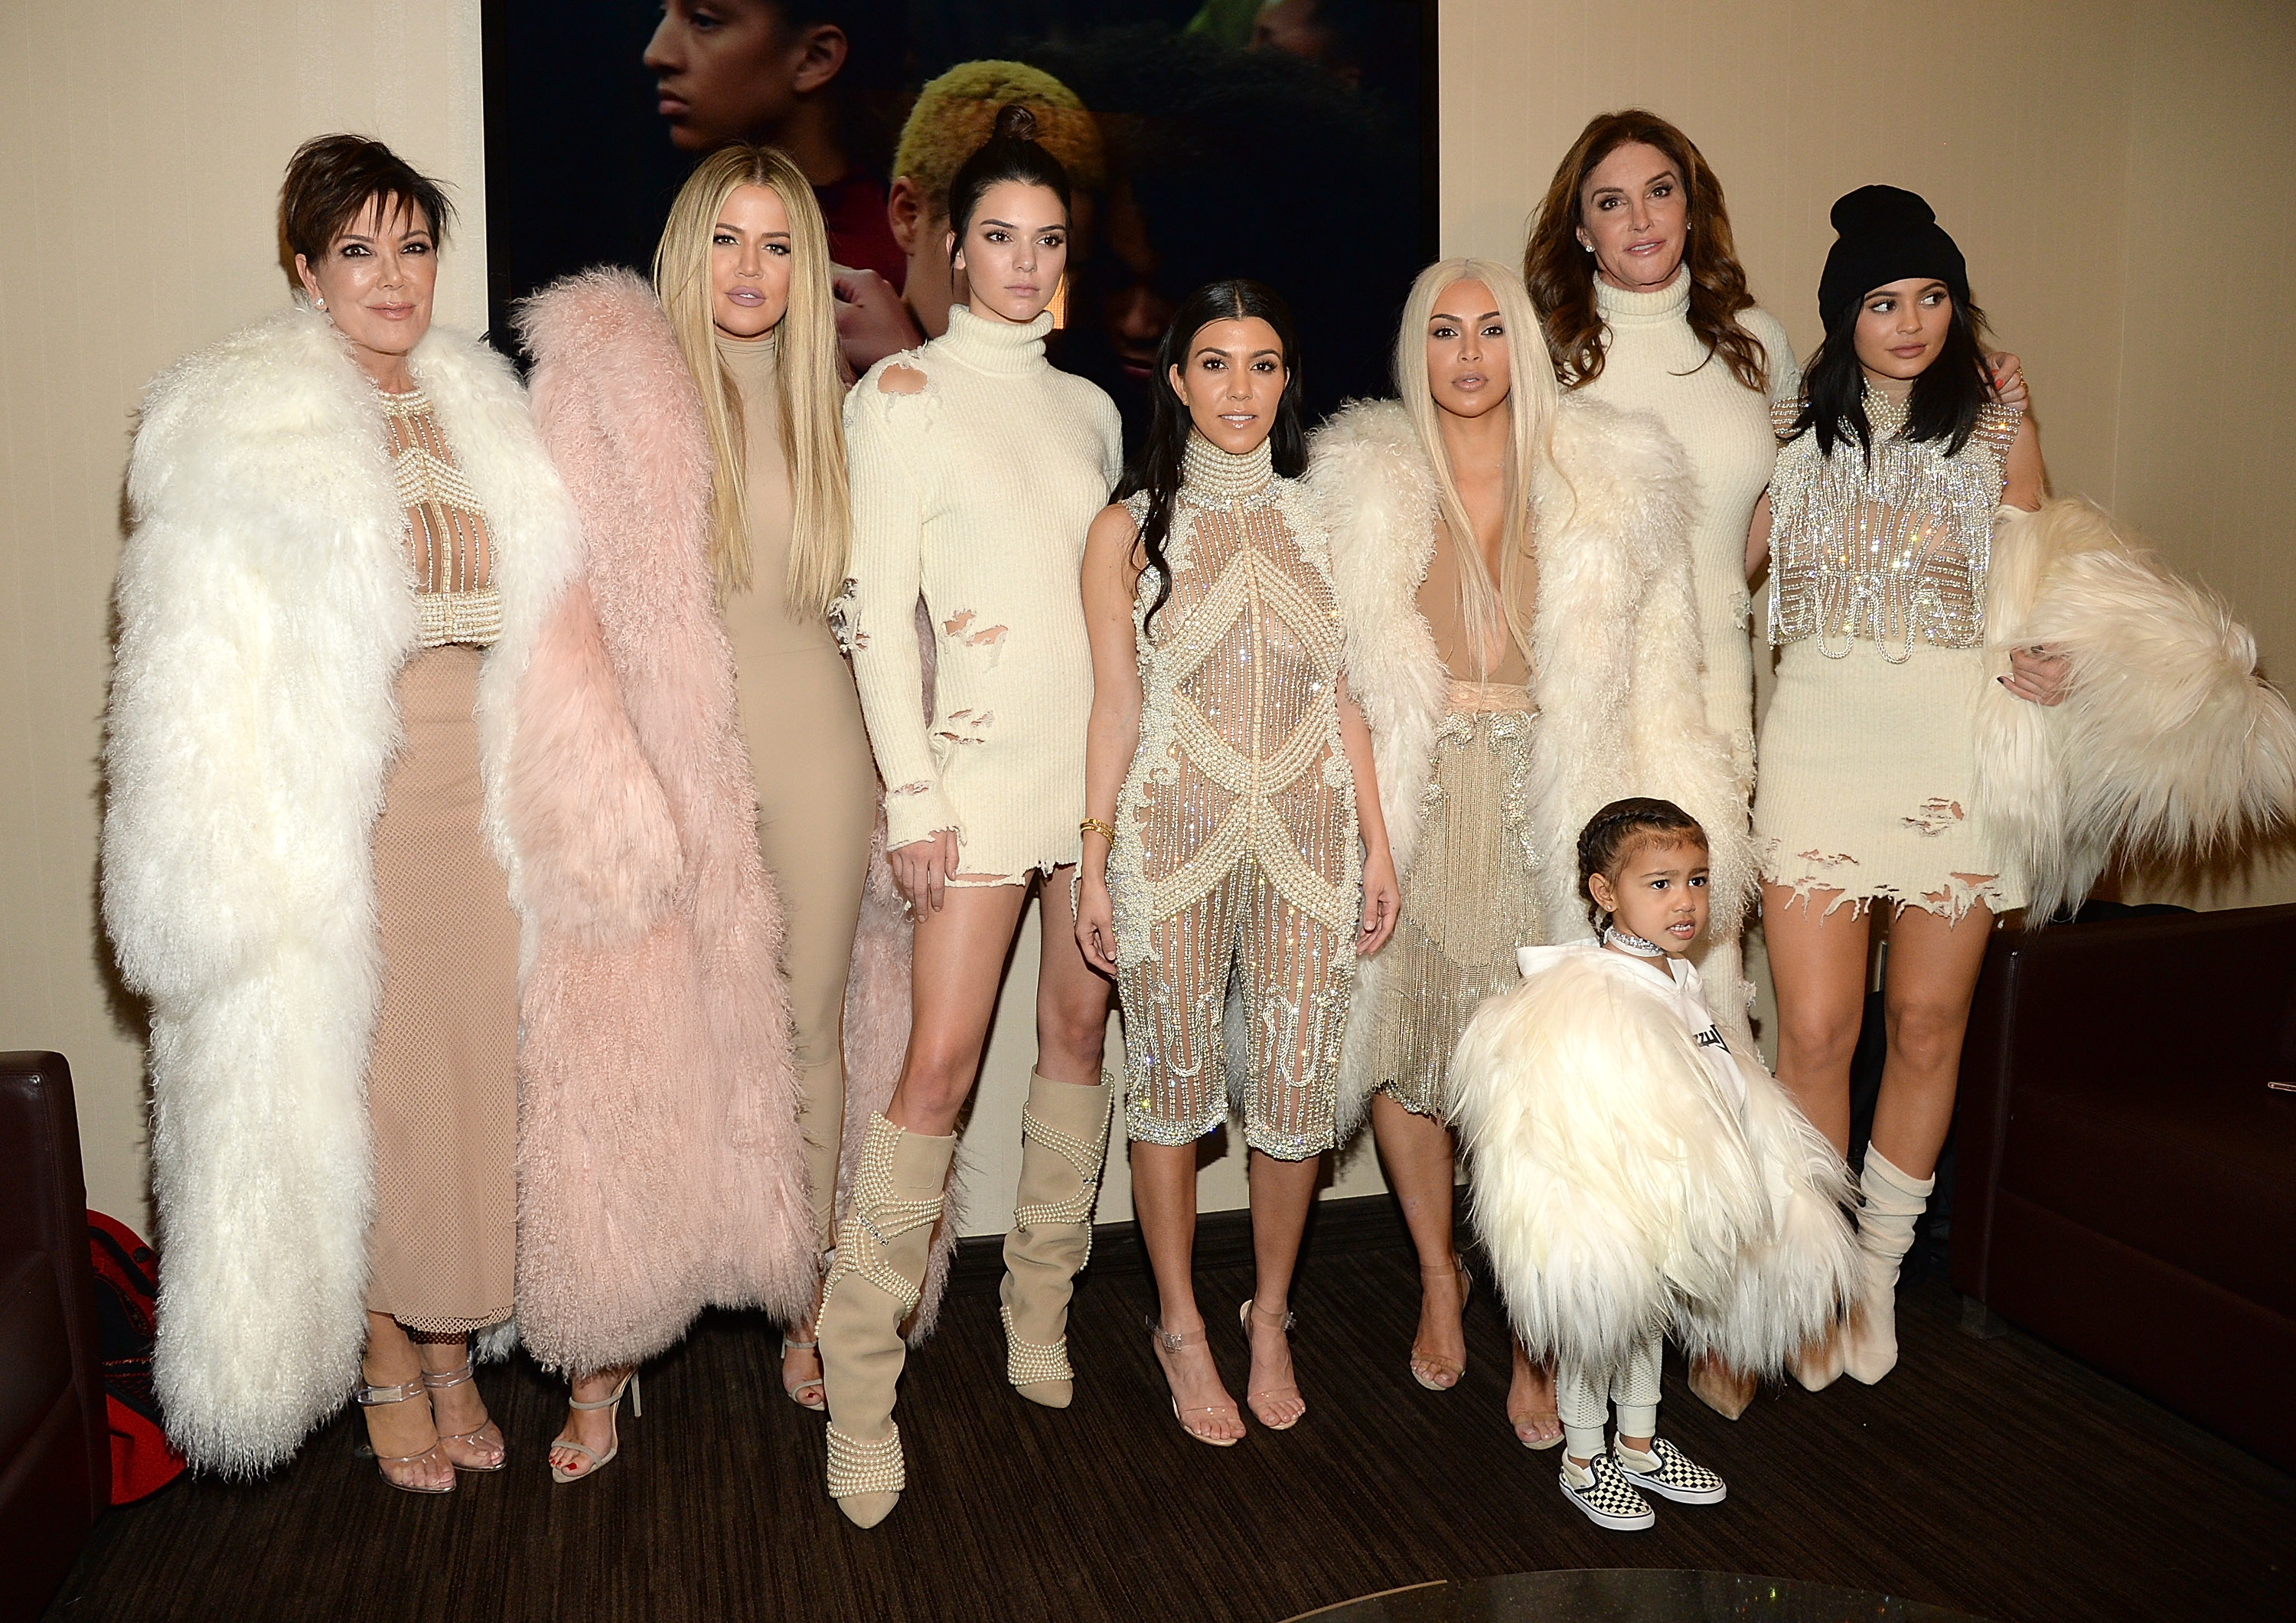 Khloe Kardashian, Kris Jenner, Kendall Jenner, Kourtney Kardashian, Kim Kardashian, North West, Caitlyn Jenner and Kylie Jenner attend the Kanye West Yeezy Season 3 event at Madison Square Garden 